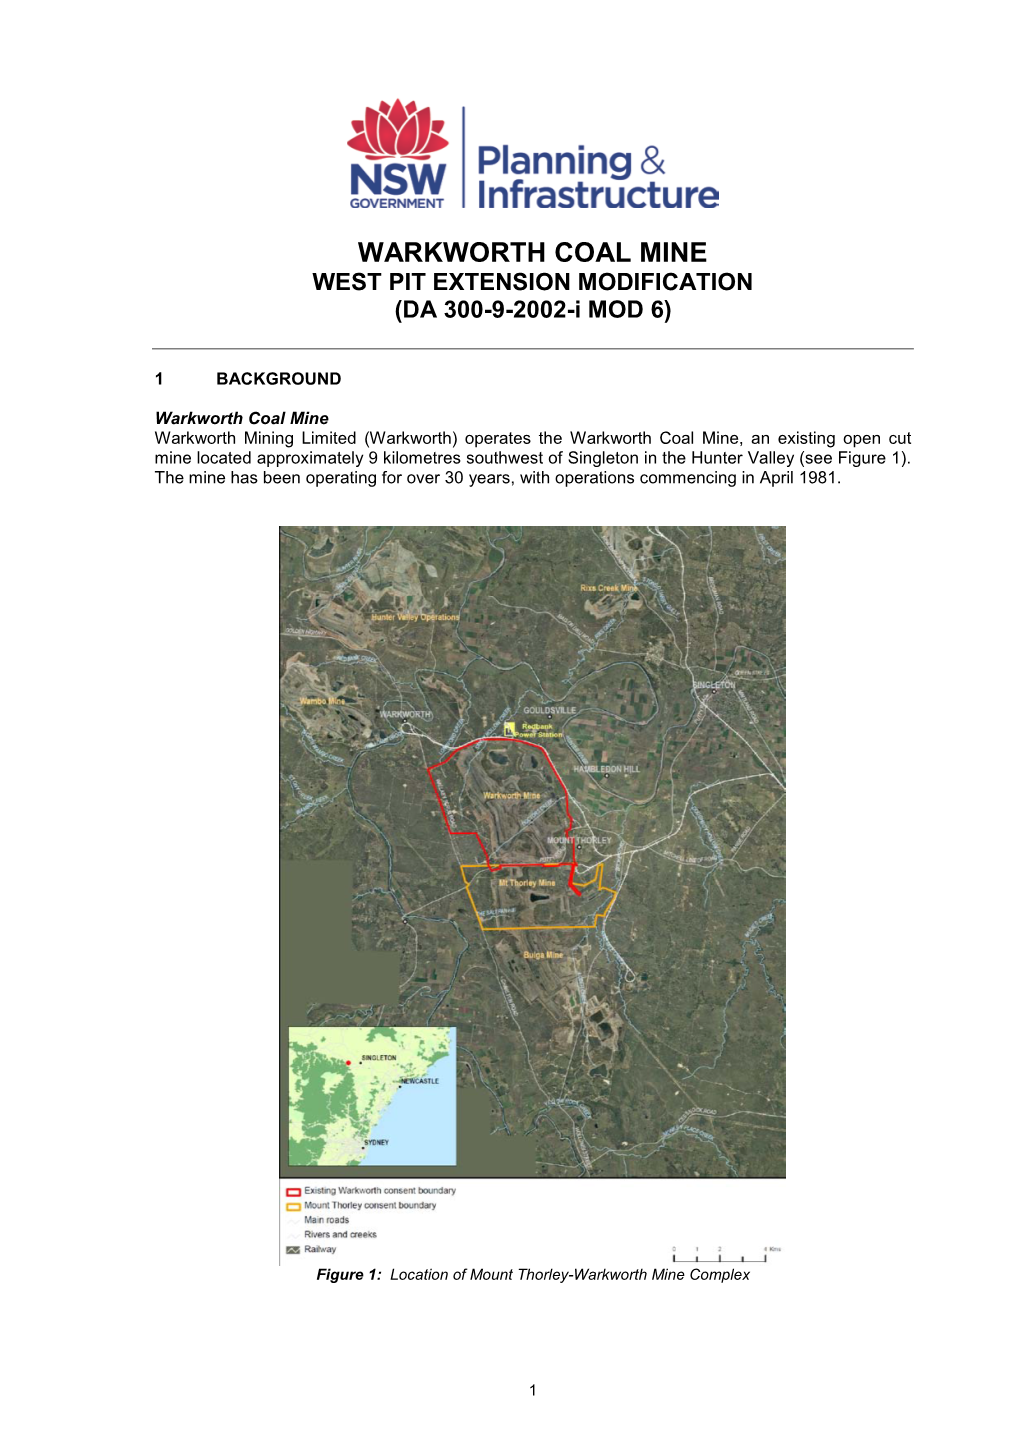 WARKWORTH COAL MINE WEST PIT EXTENSION MODIFICATION (DA 300-9-2002-I MOD 6)